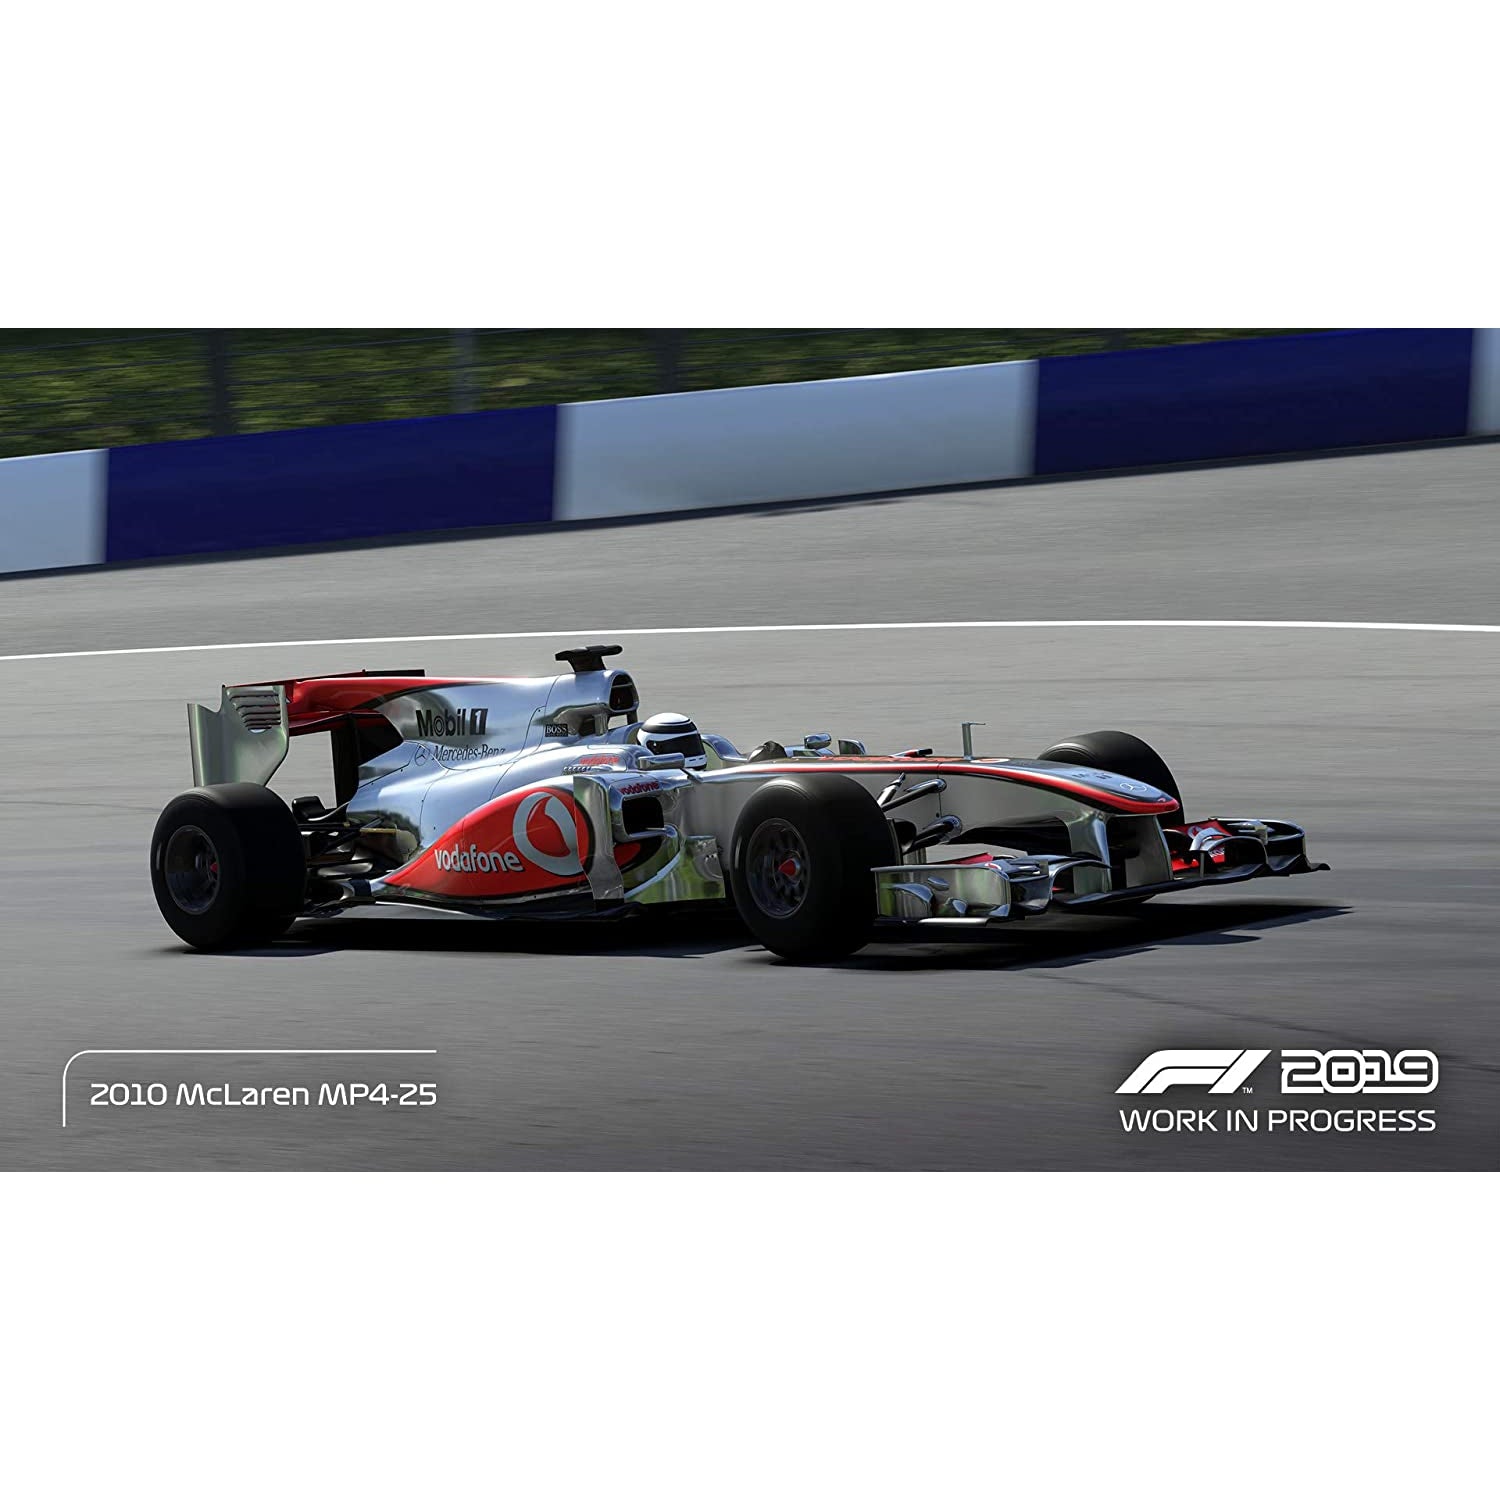 F1 2019 - Anniversary Edition (PS4)